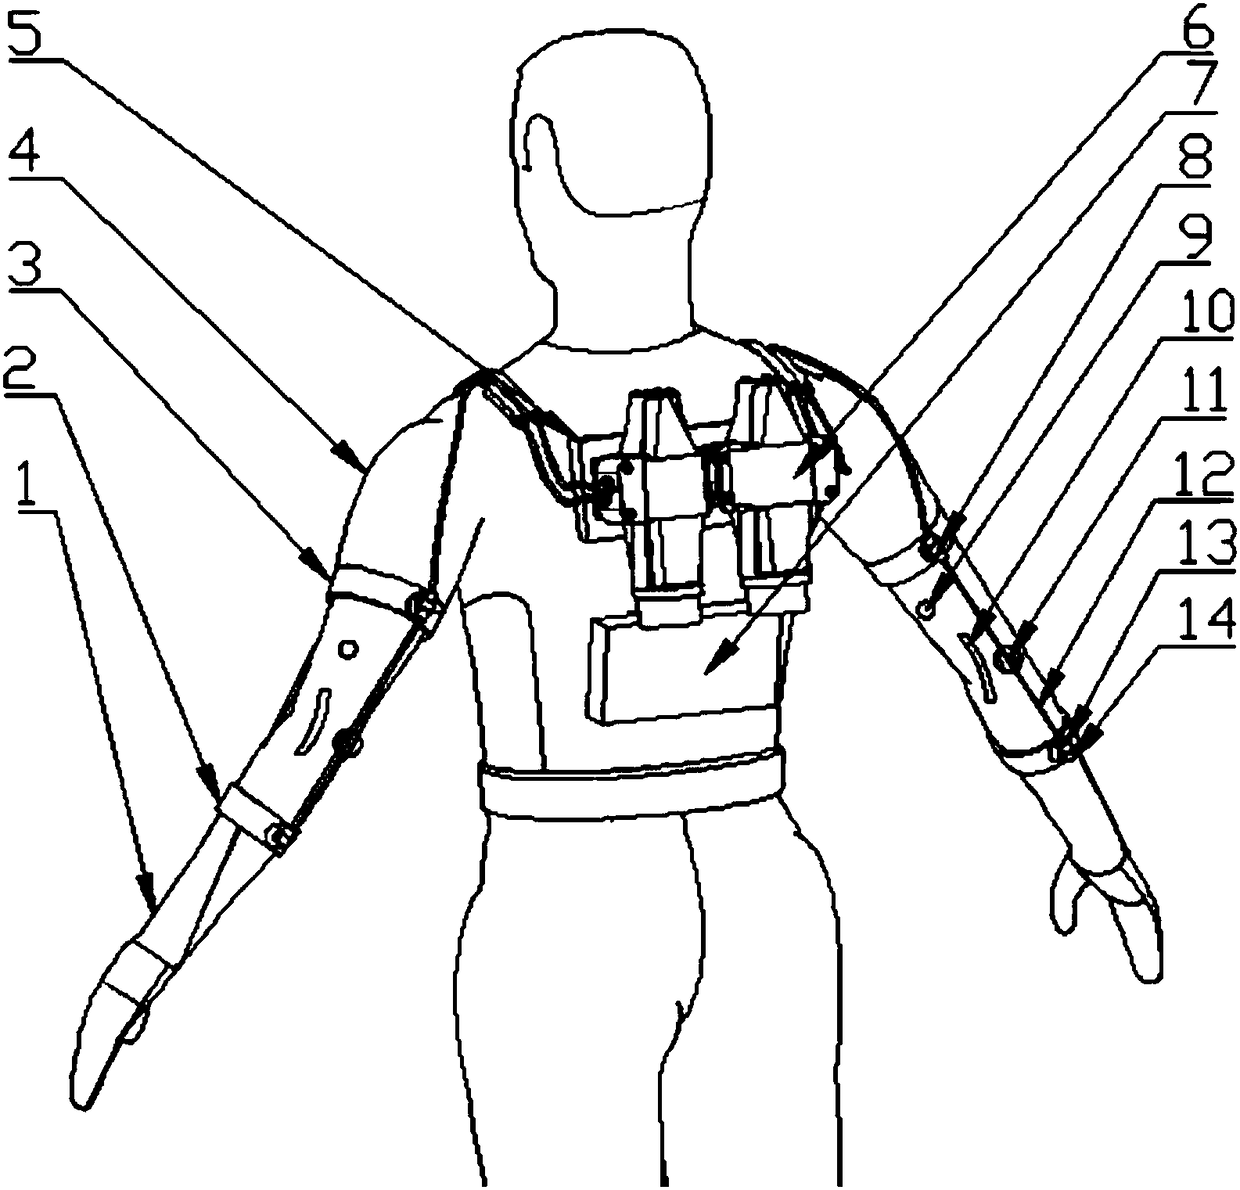 Wearable flexible upper limb exoskeleton assisting system